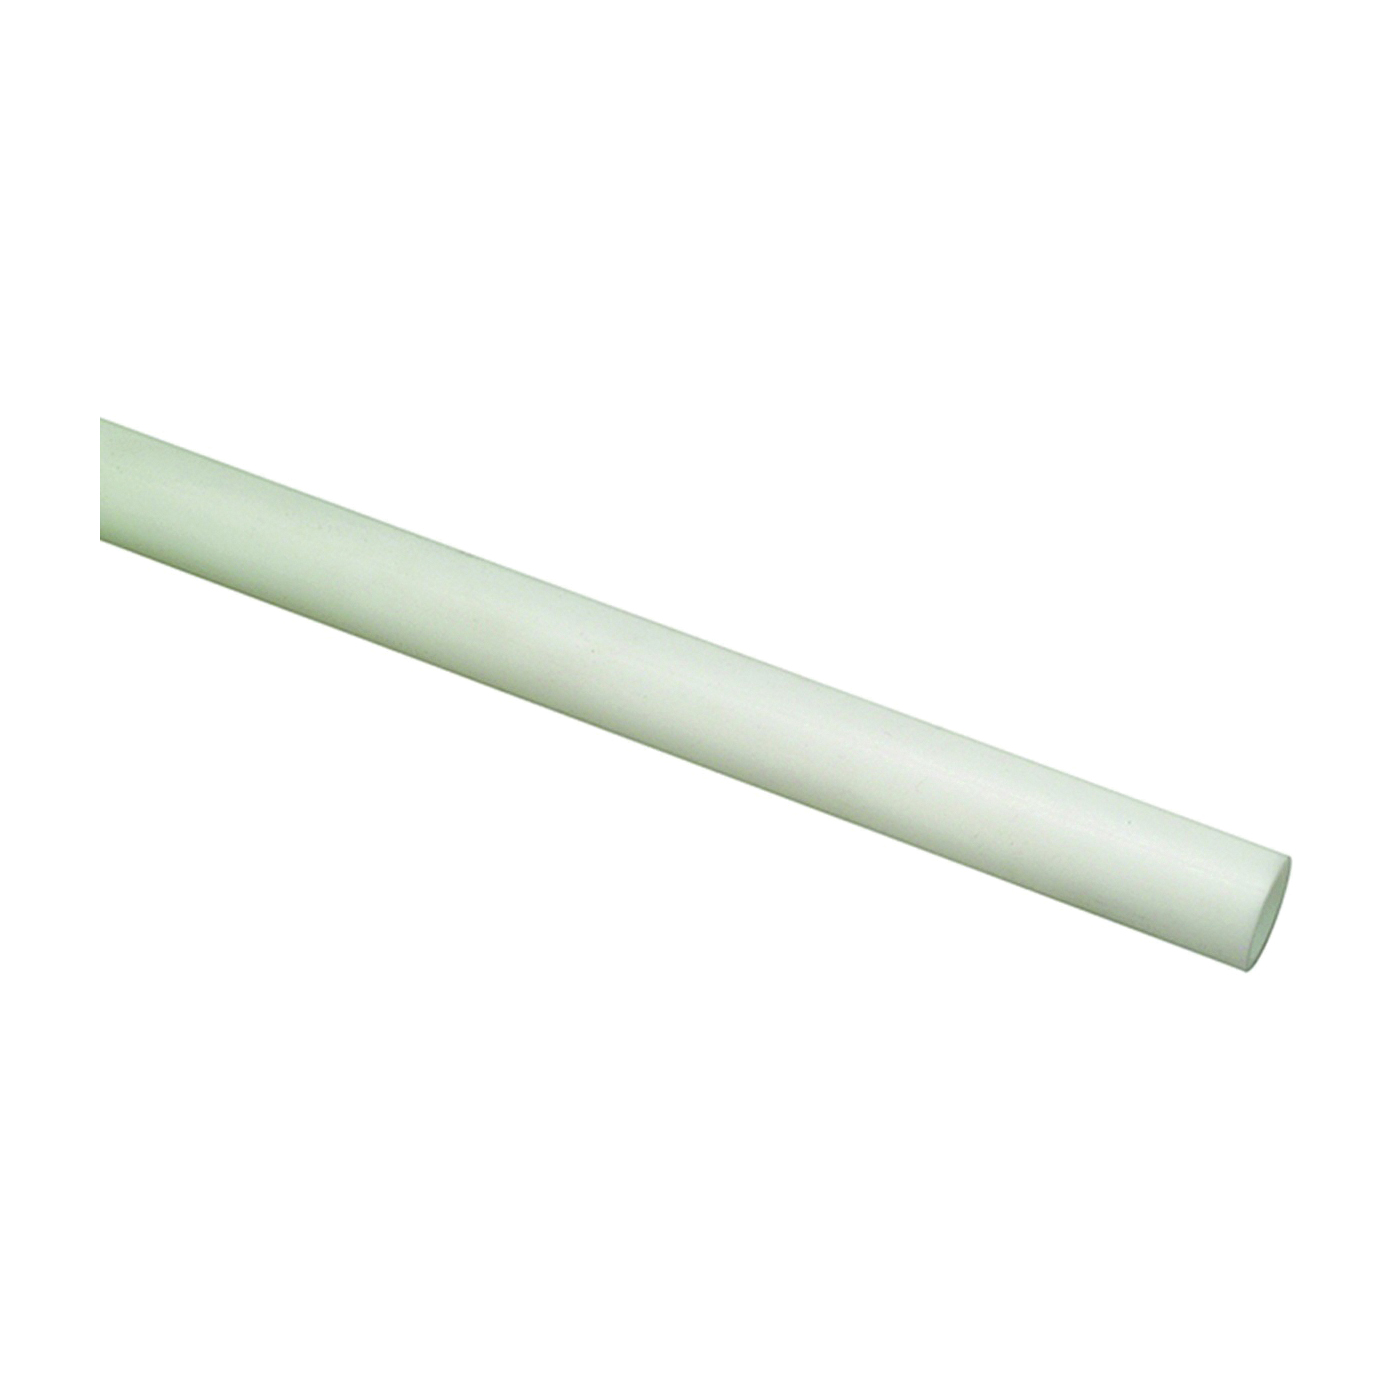 APPW1034 PEX-B Pipe Tubing, 3/4 in, White, 10 ft L